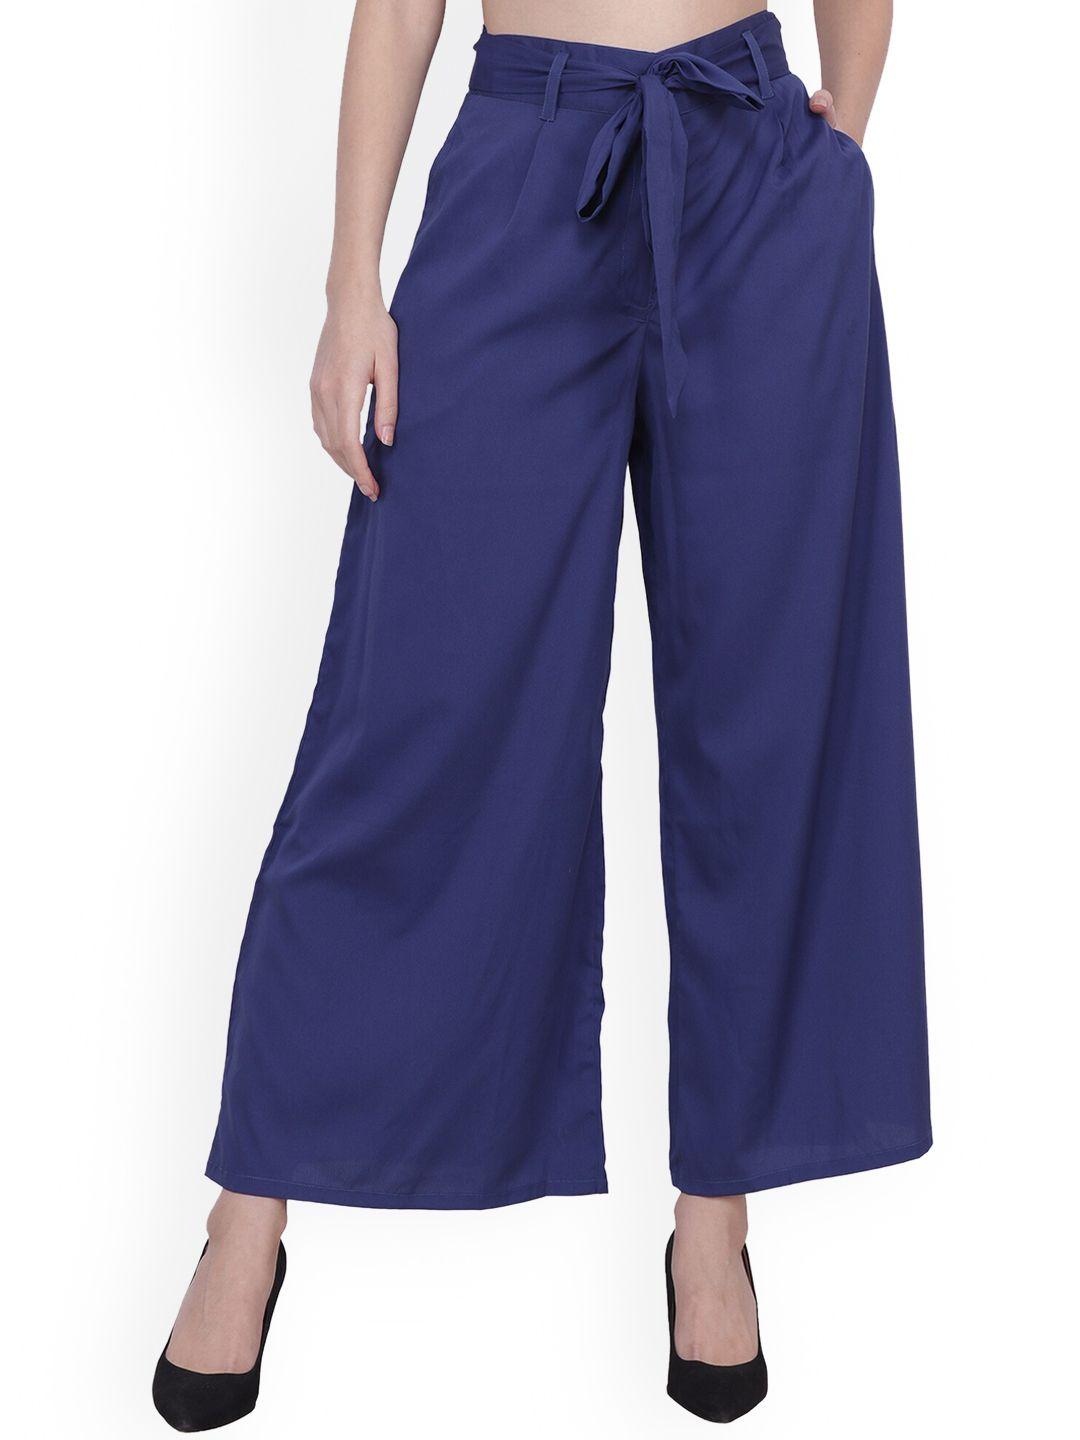 frempy women blue original trousers